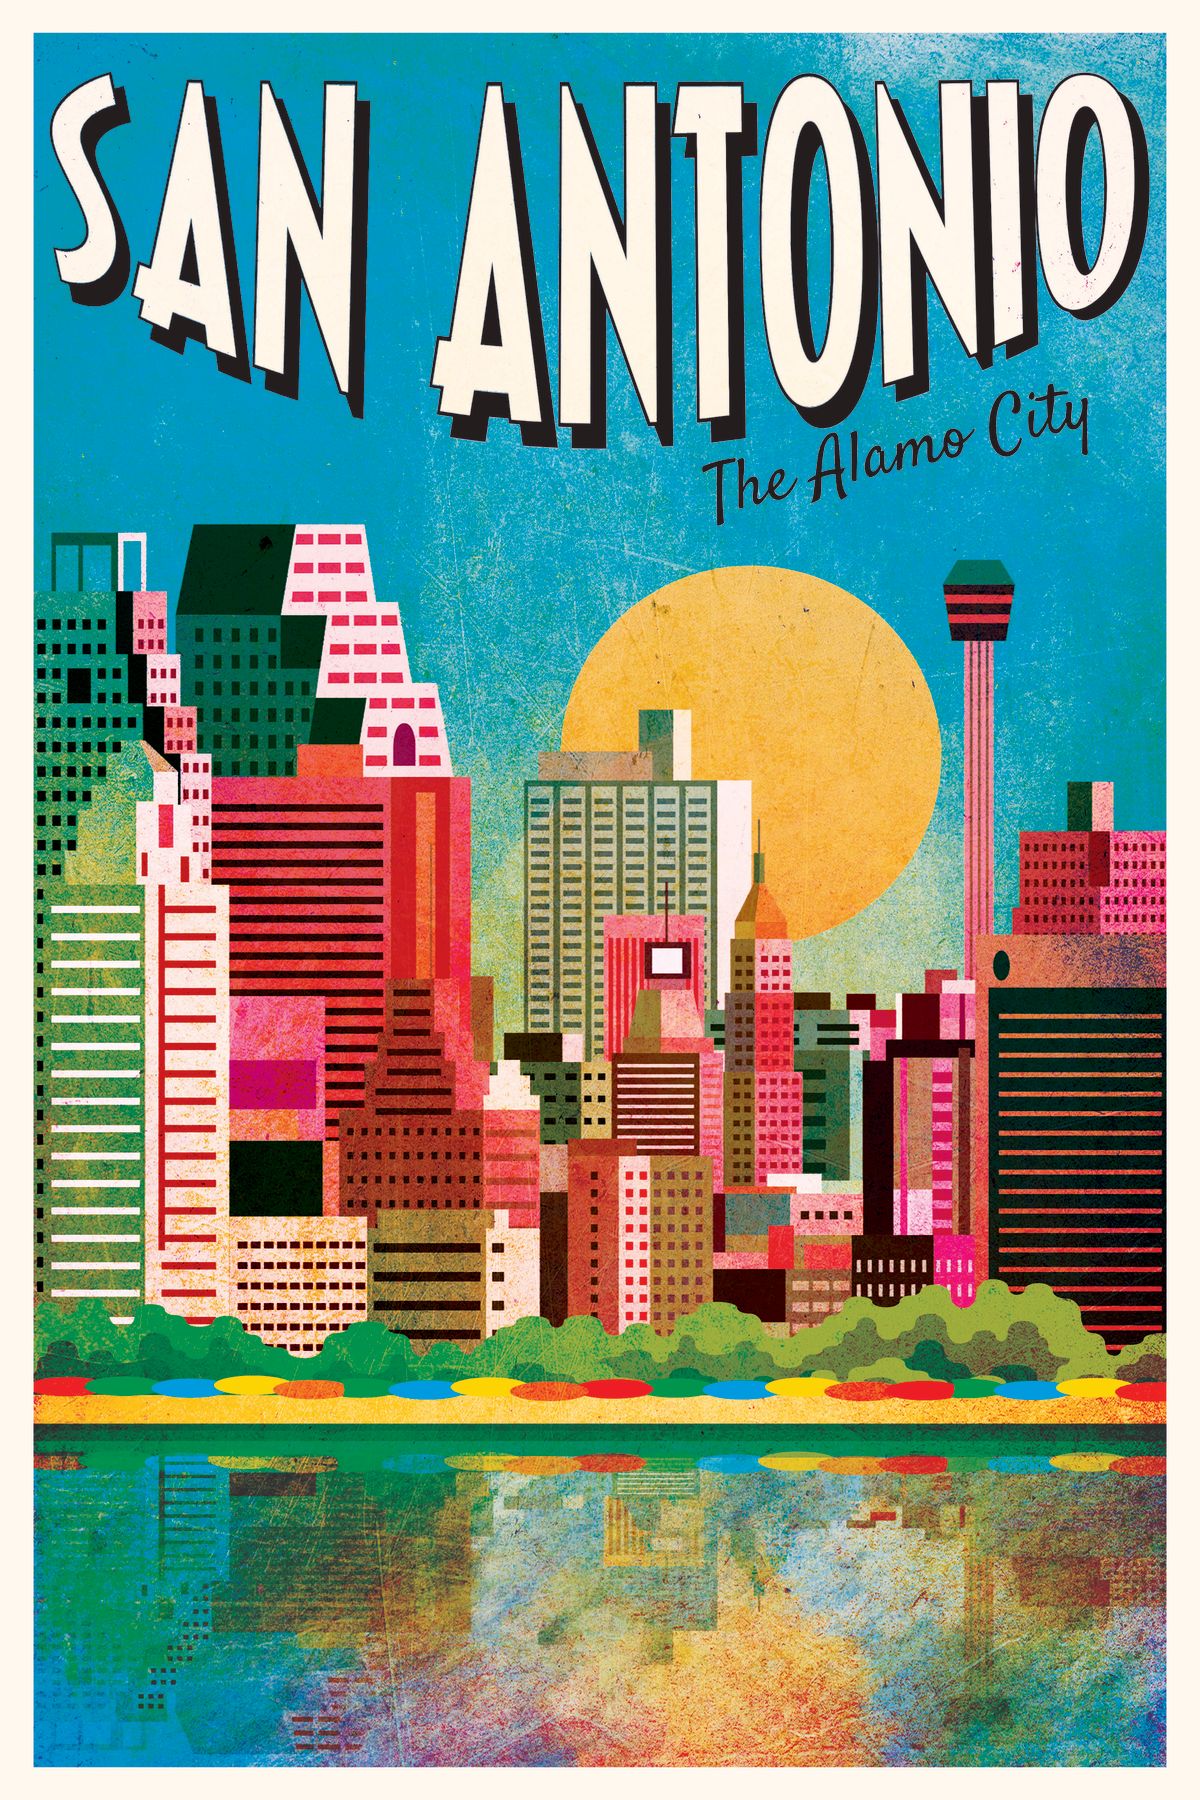 San Antonio The Alamo City